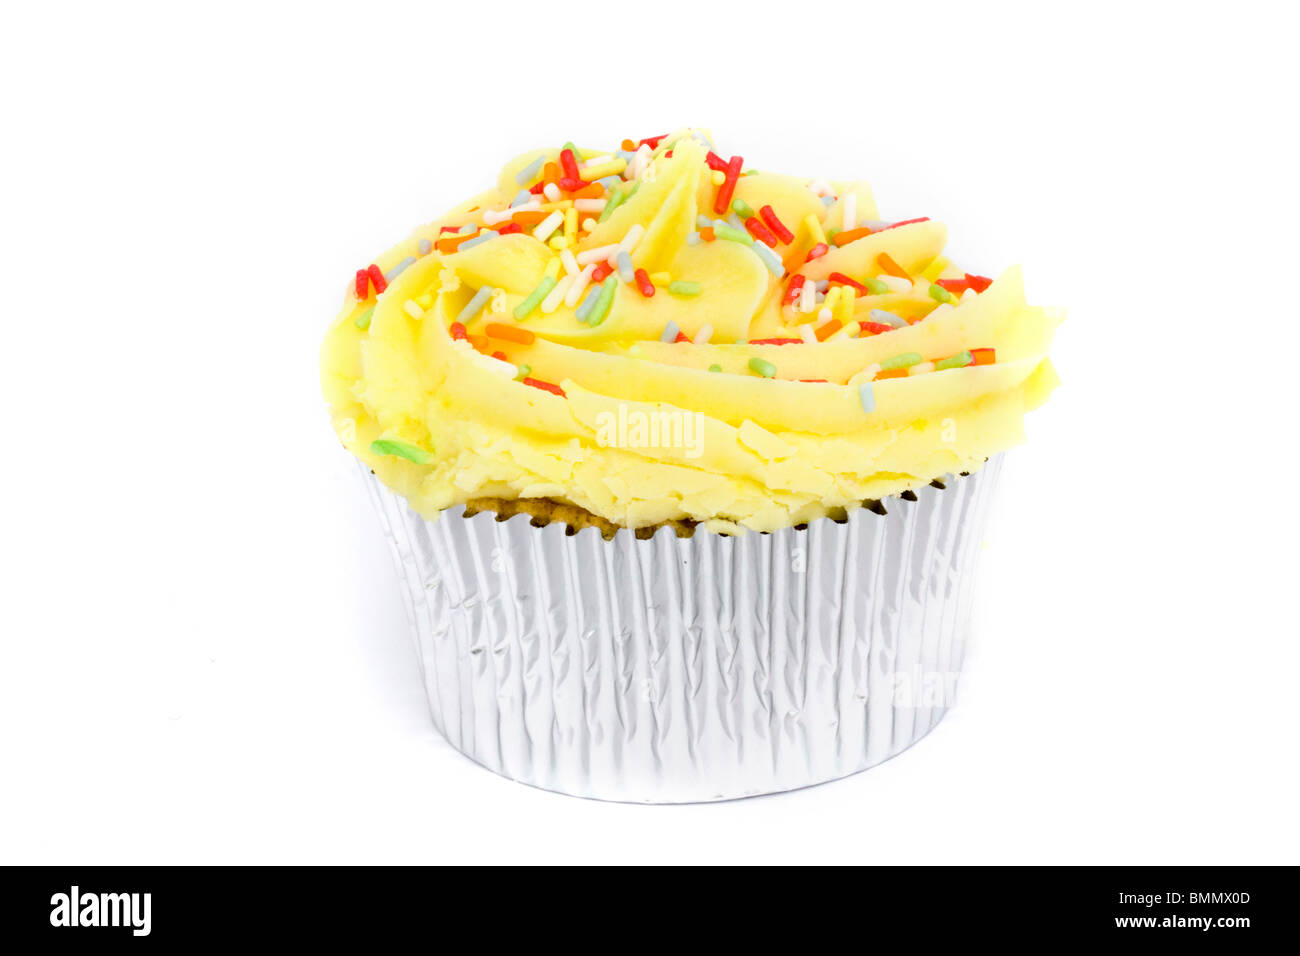 Cupcake amarillo sobre un fondo blanco. Foto de stock